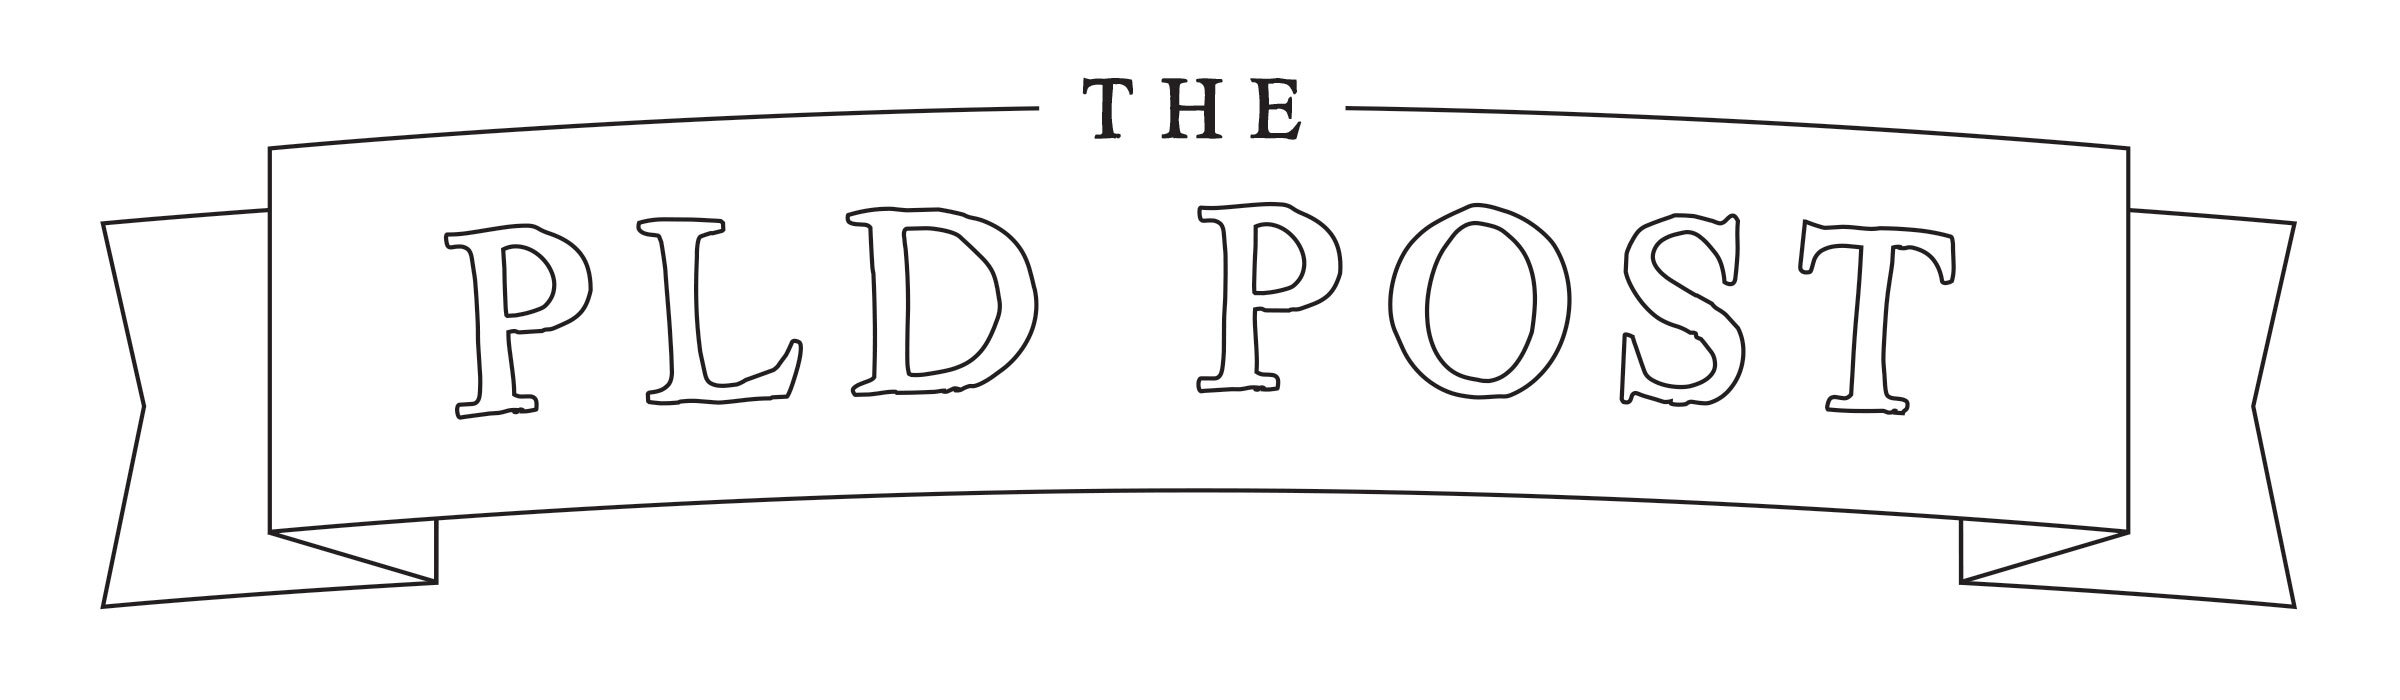 the-pld-post-logo-drafts-11.jpg